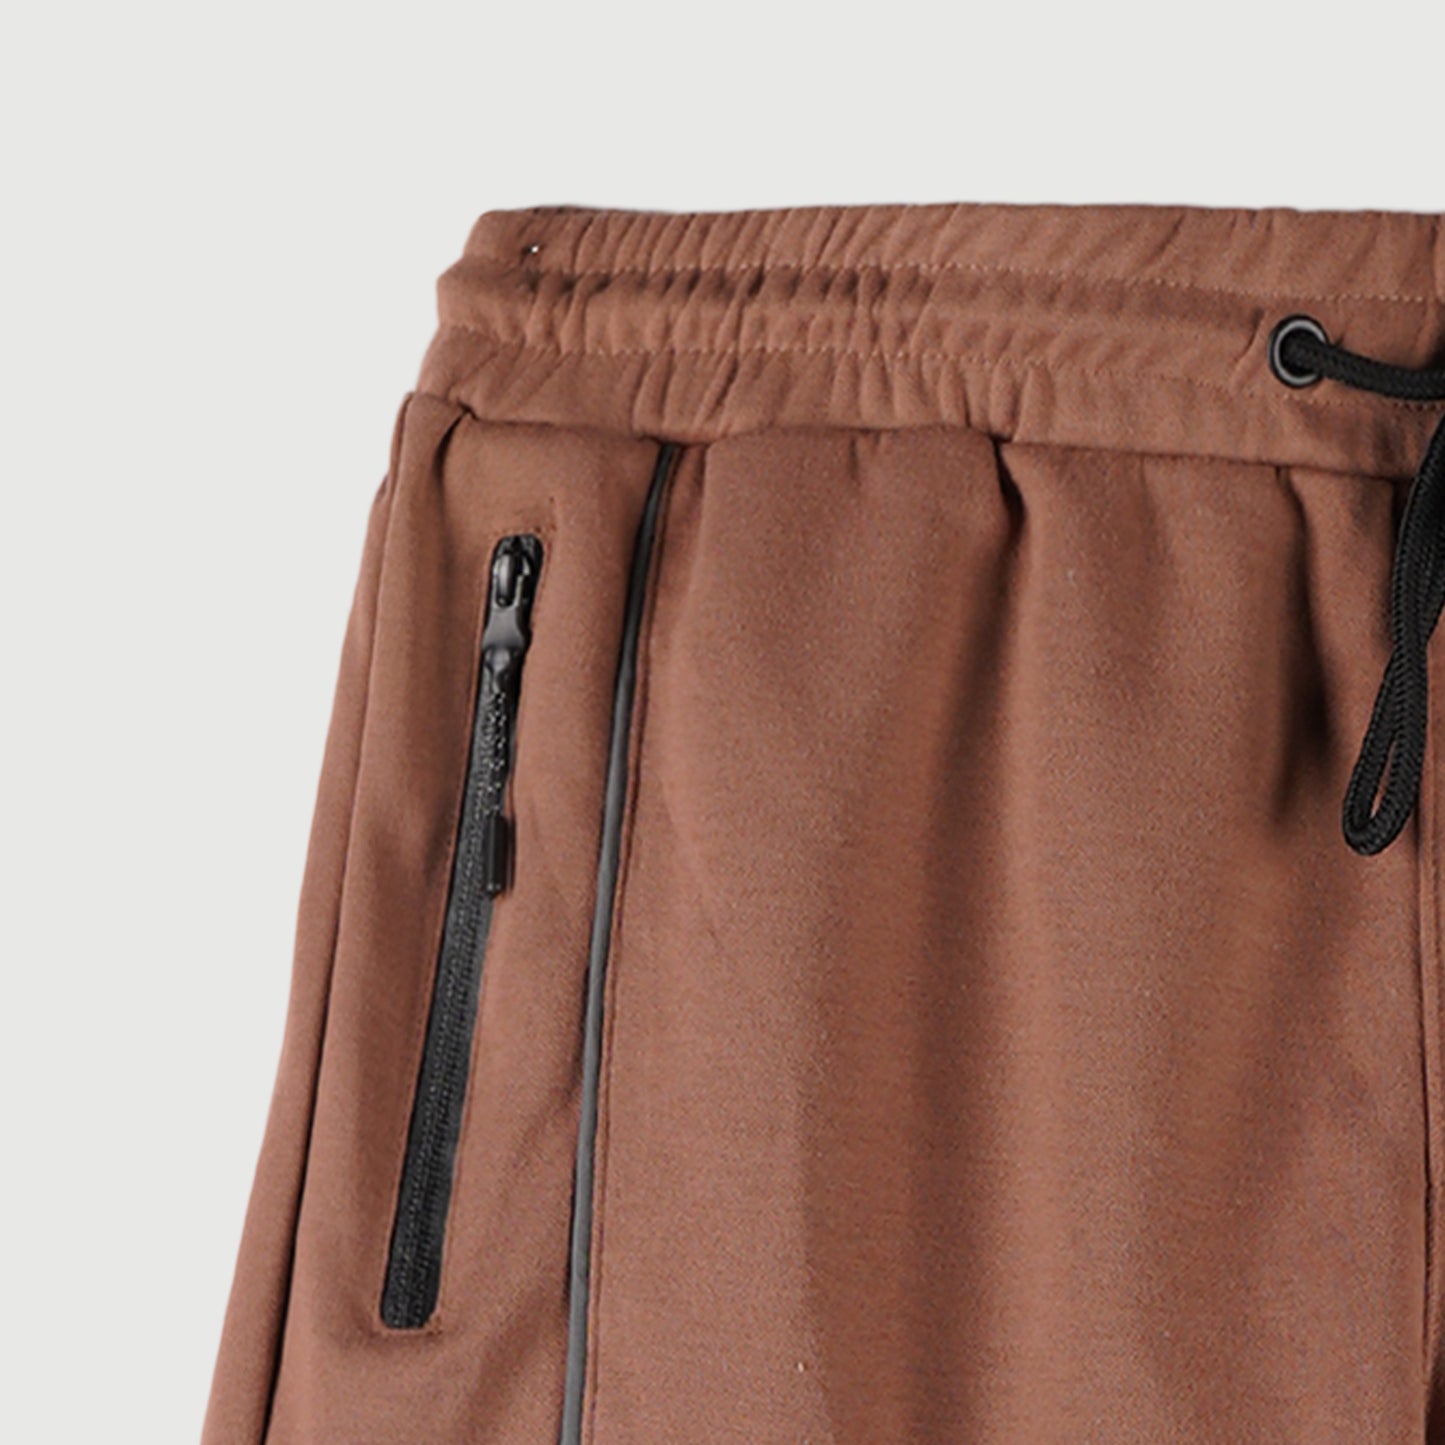 Petrol Basic Non-Denim Jogger Shorts for Men Regular Fitting Garment Wash Fabric Casual short Black Jogger short for Men 117458 (Brown)